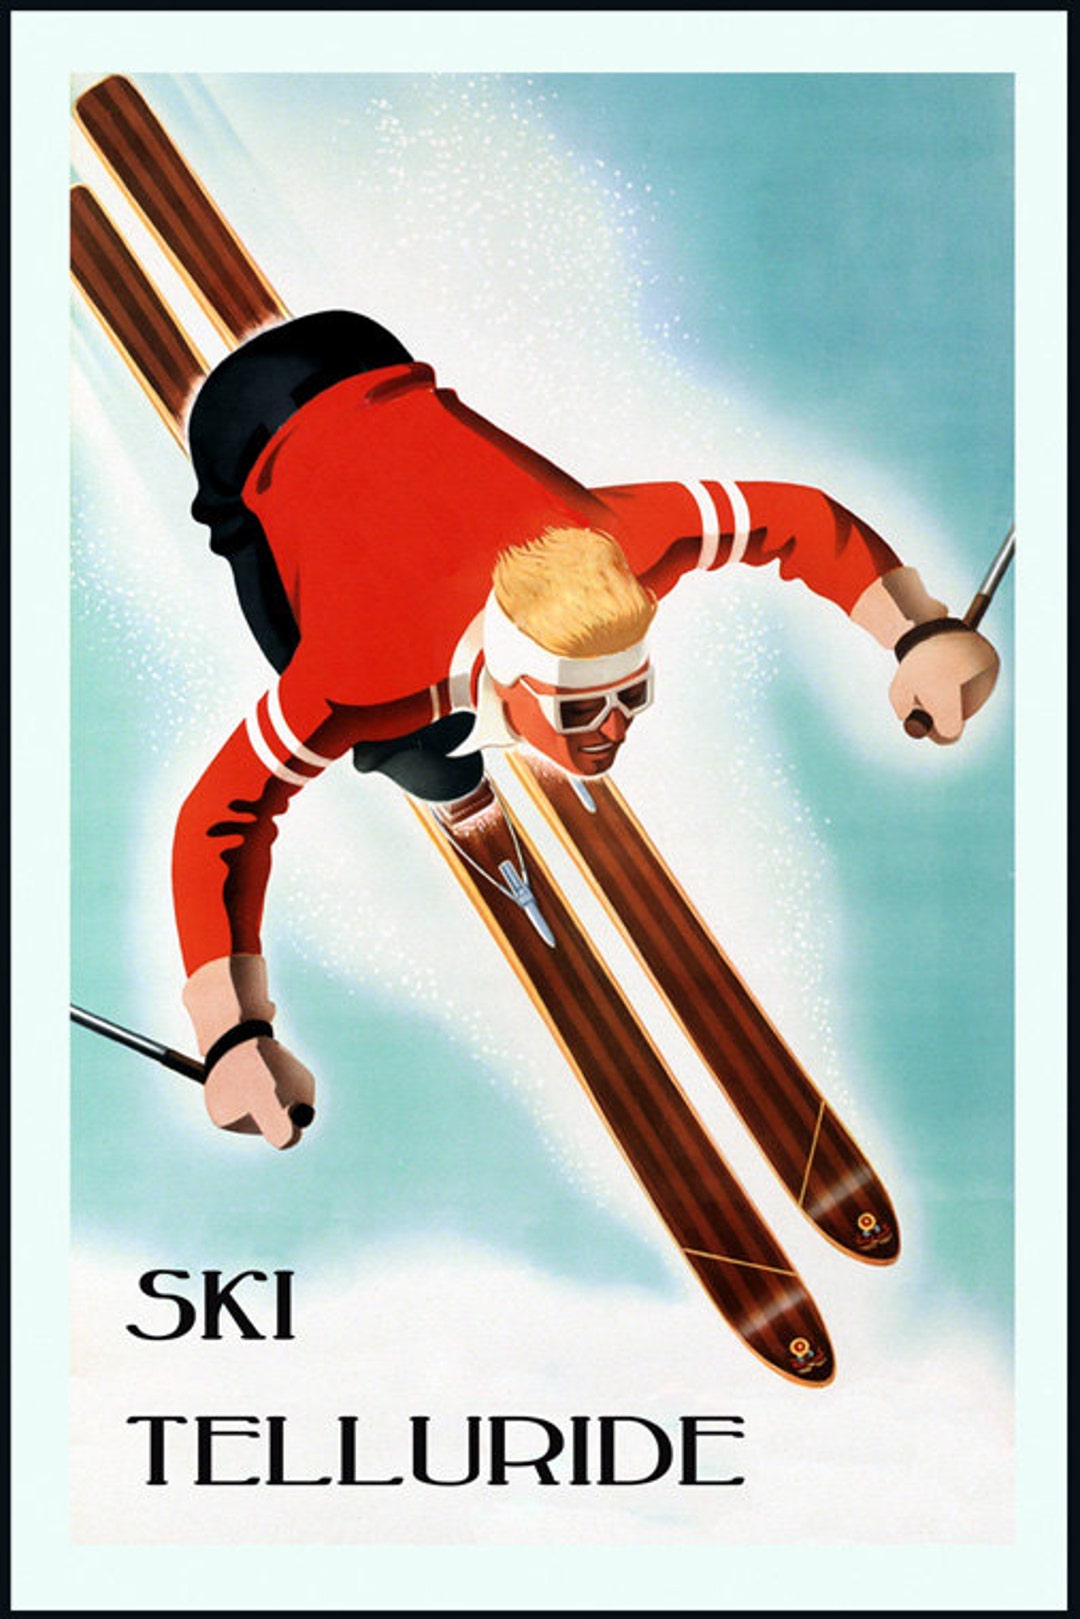 Ski Telliride Colorado Rocky Snow Mountains Skiing Winter Sport American  Travel Tourism Vintage Poster Repro Free SHIPPING in USA - Etsy